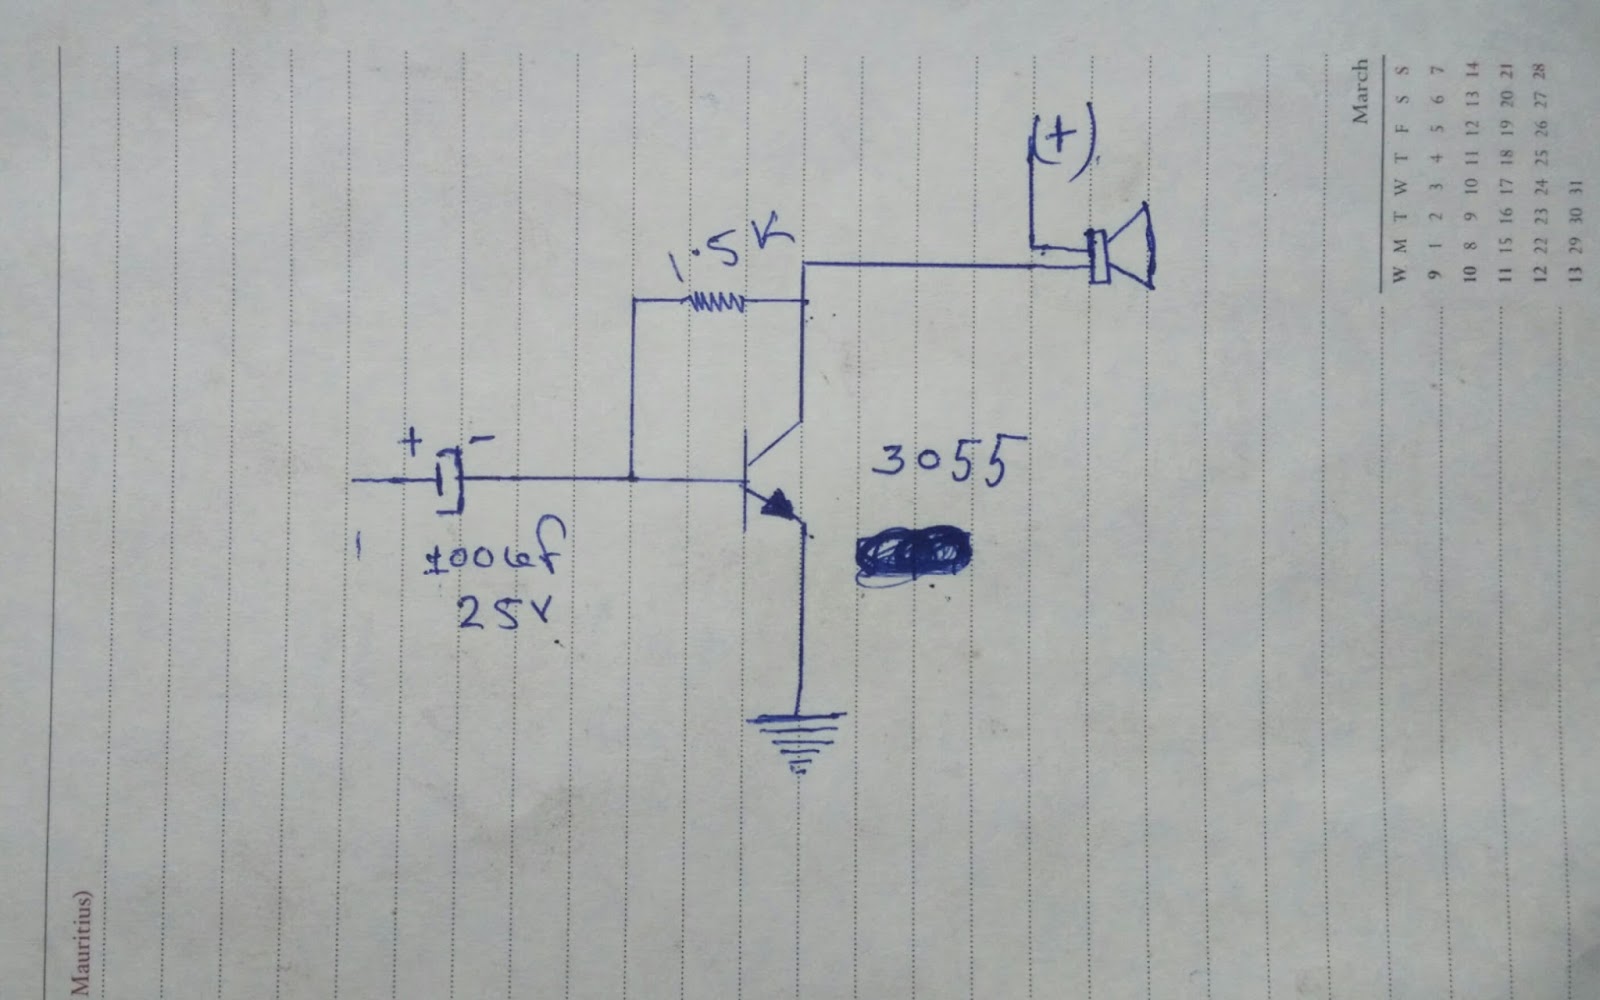 3055 transistor audio amplifier Rk electronics Project